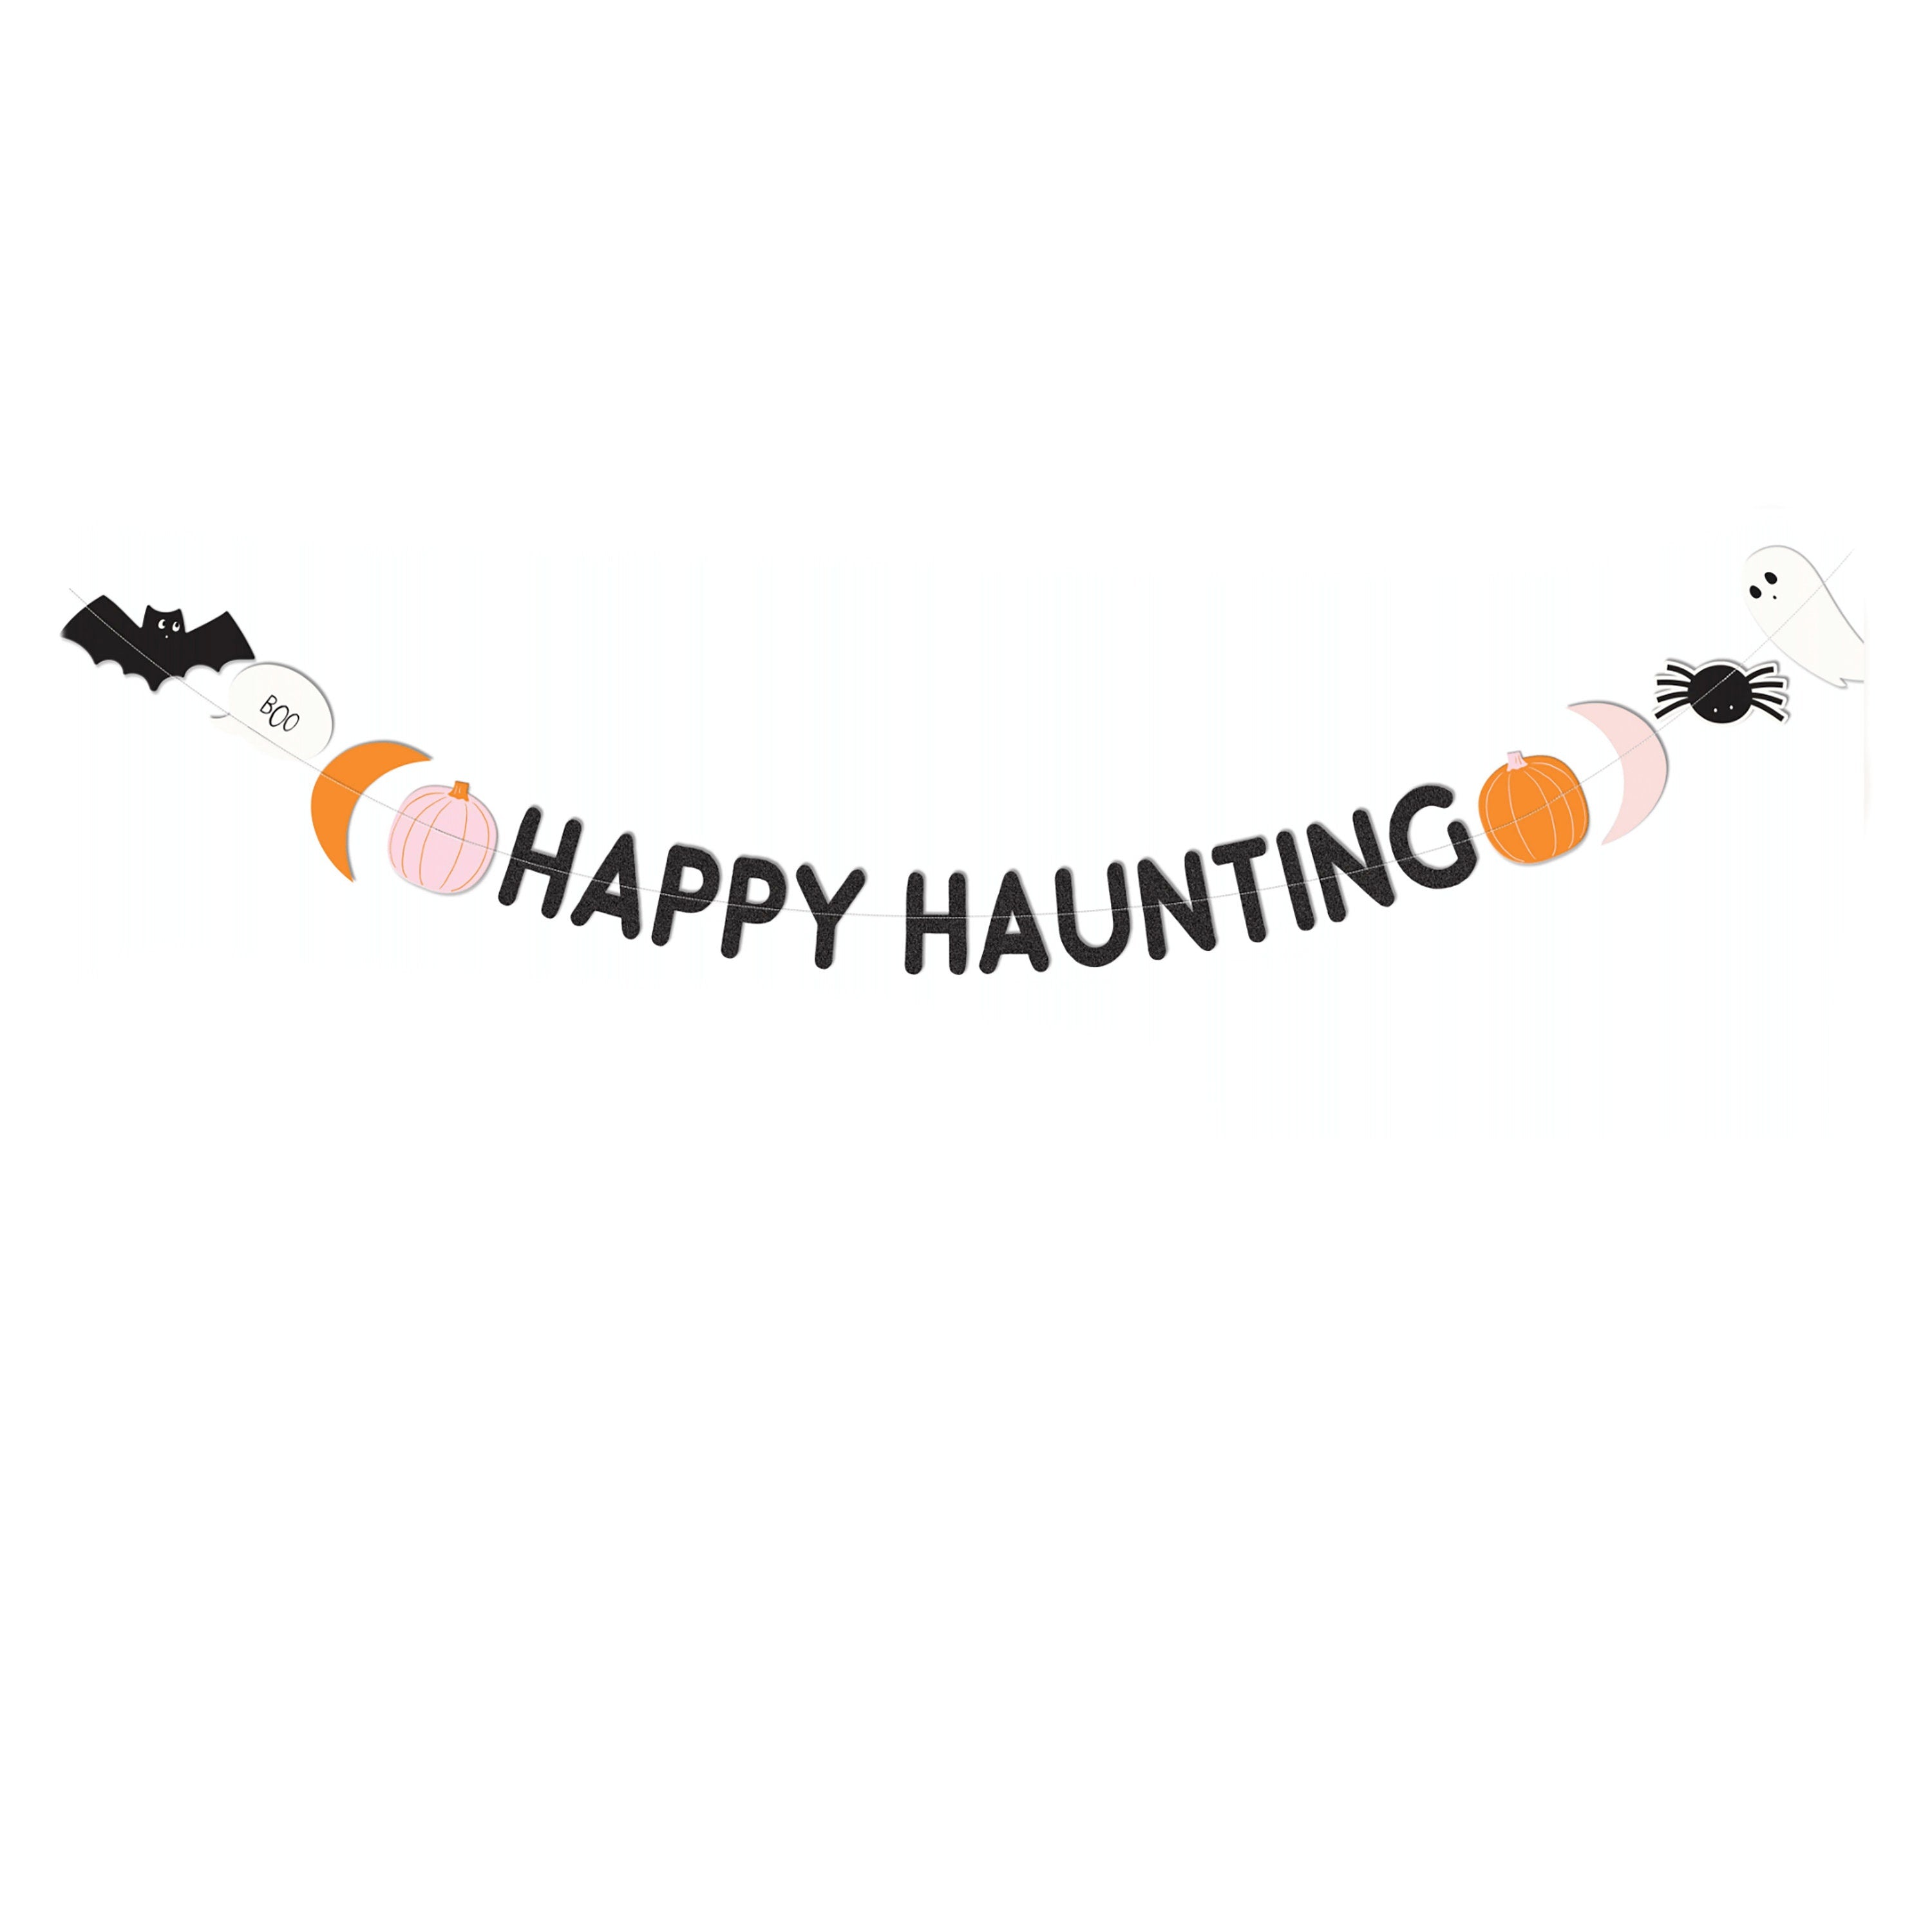 Happy Haunting Banner | Halloween Banner - Halloween Mantel Decor - Halloween Party Decor - Halloween Home Decor - Kid Friendly Halloween